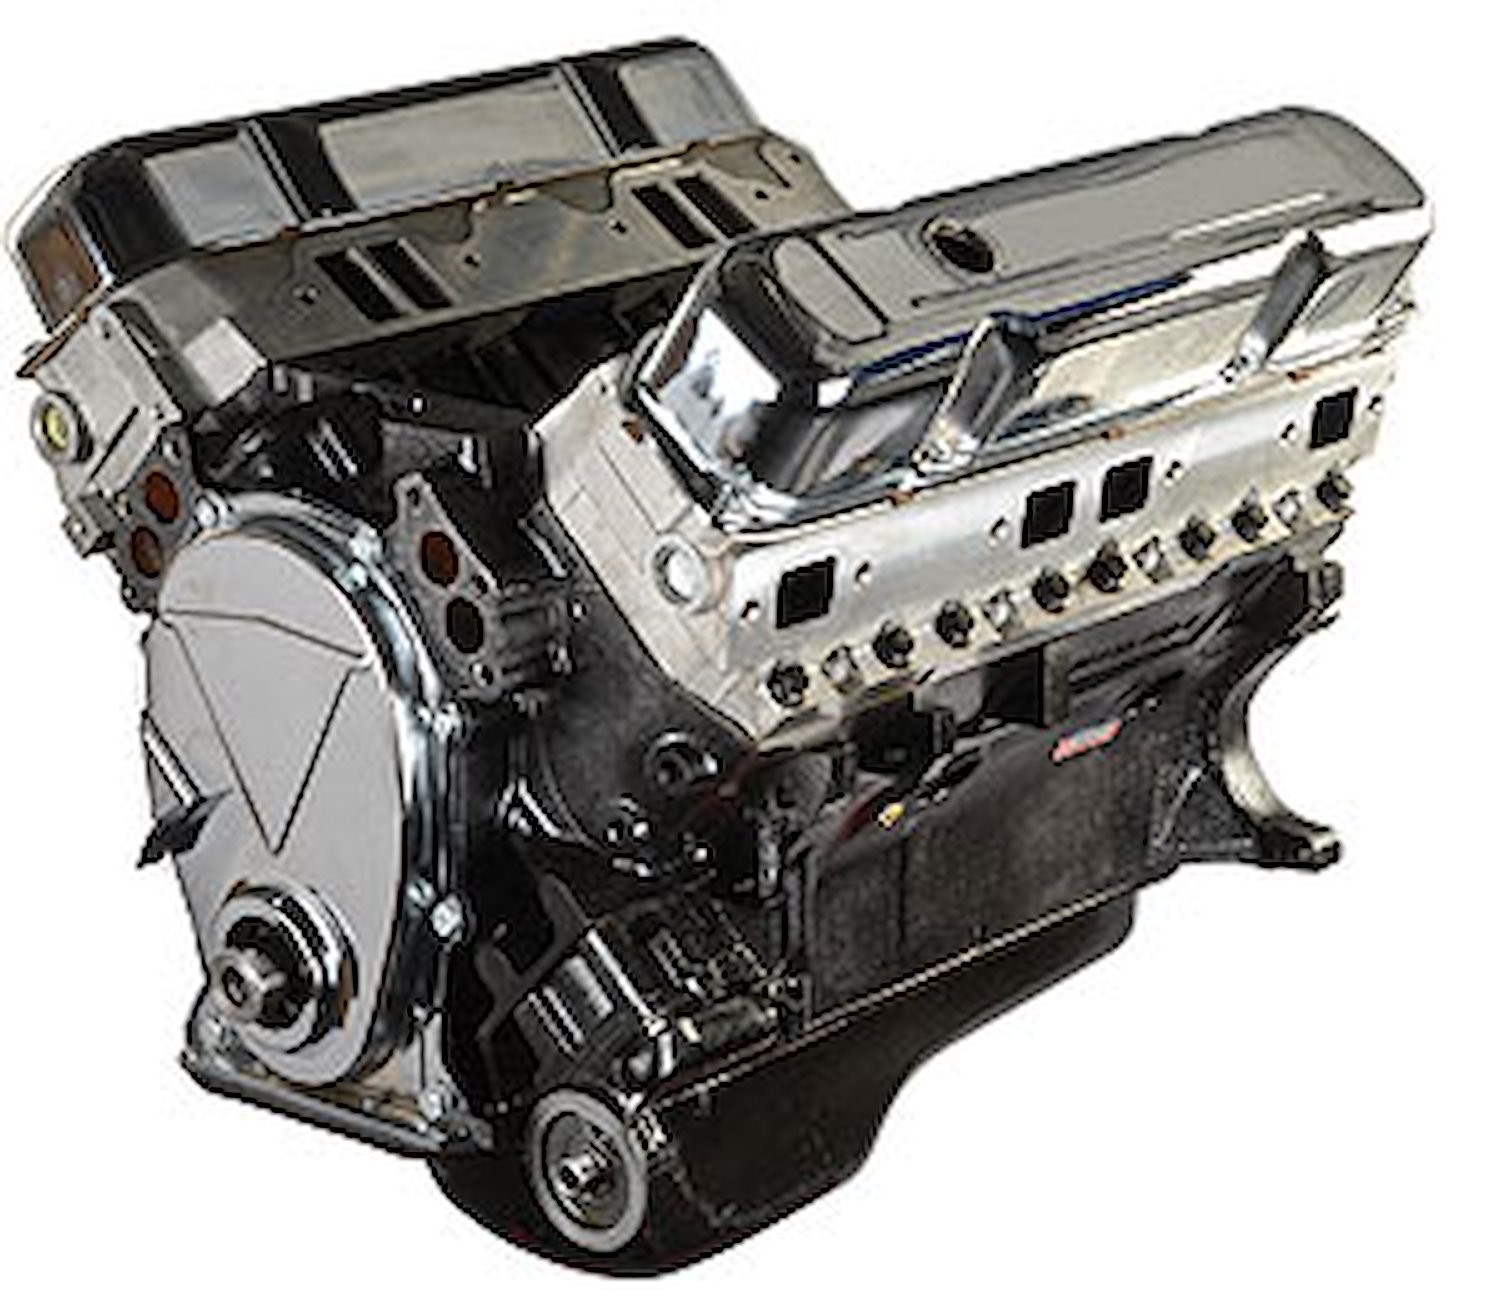 Big Block Chrysler 493ci Stroker Base Engine 525HP/590TQ